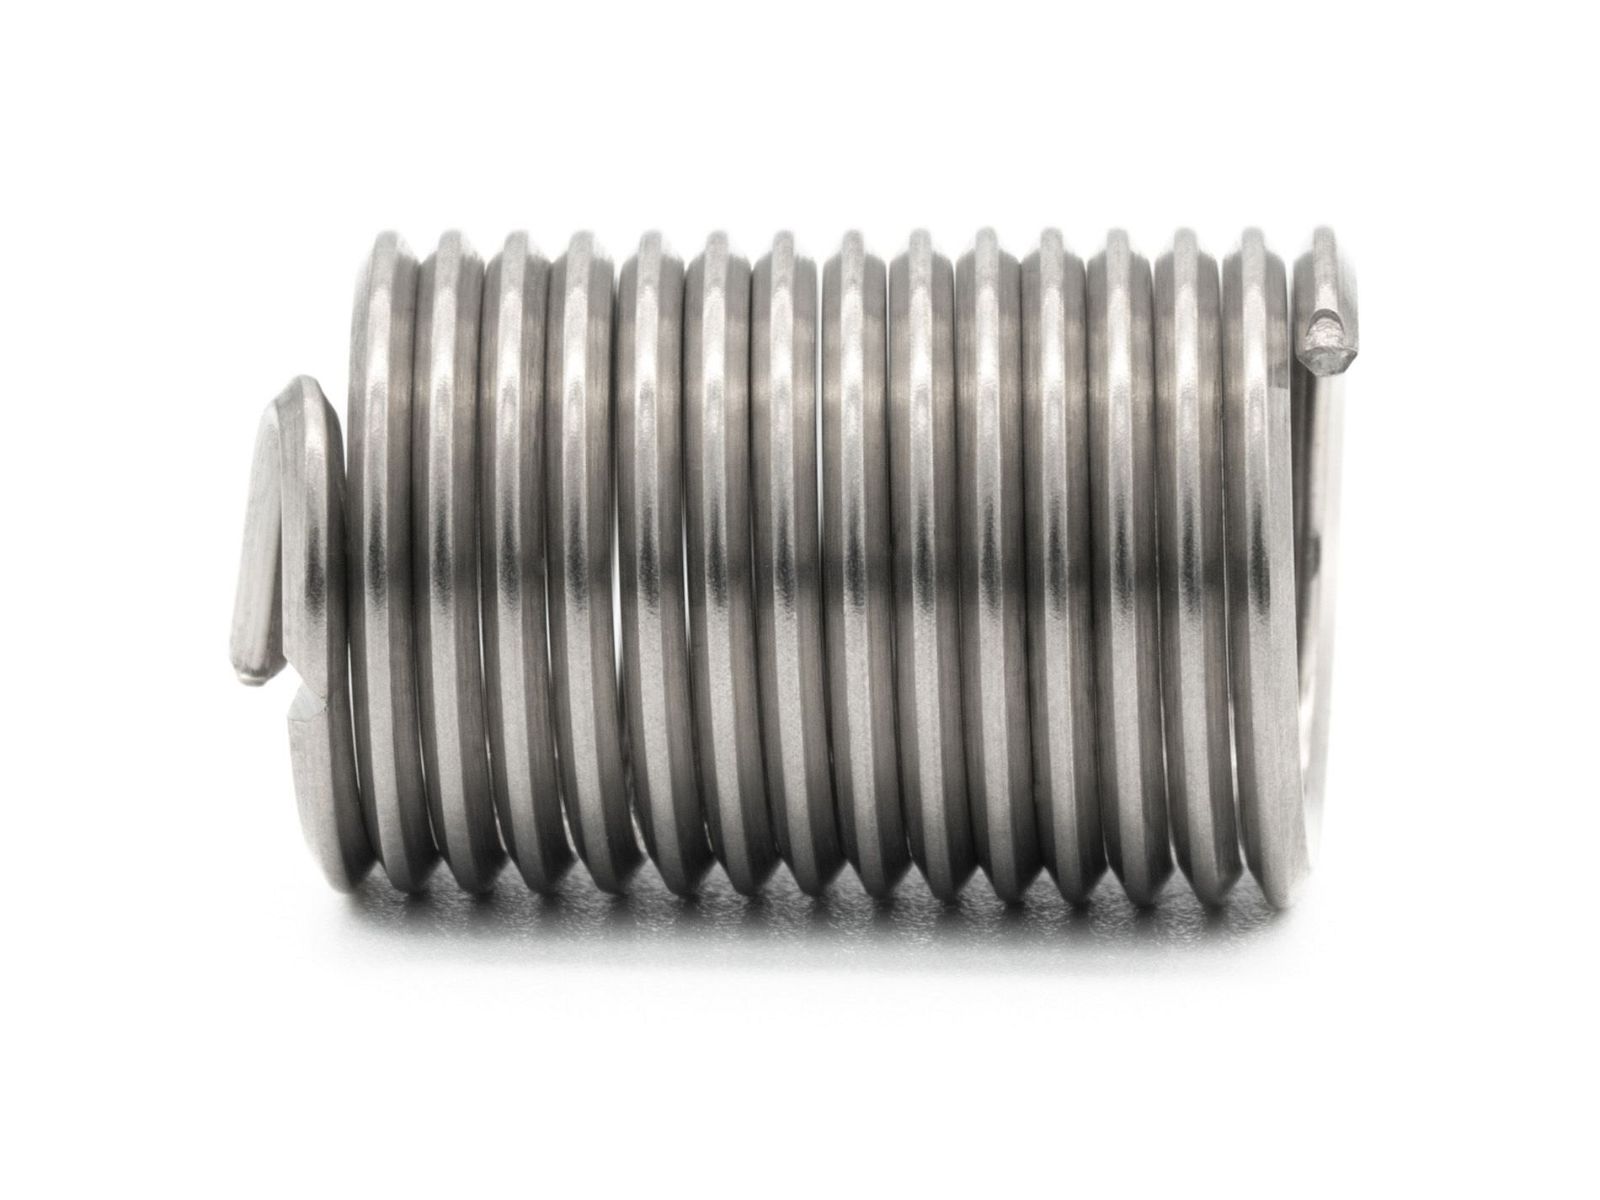 BaerCoil Wire Thread Inserts BSW 5/8 x 11 - 2.5 D (39.69 mm) - free running - 50 pcs.